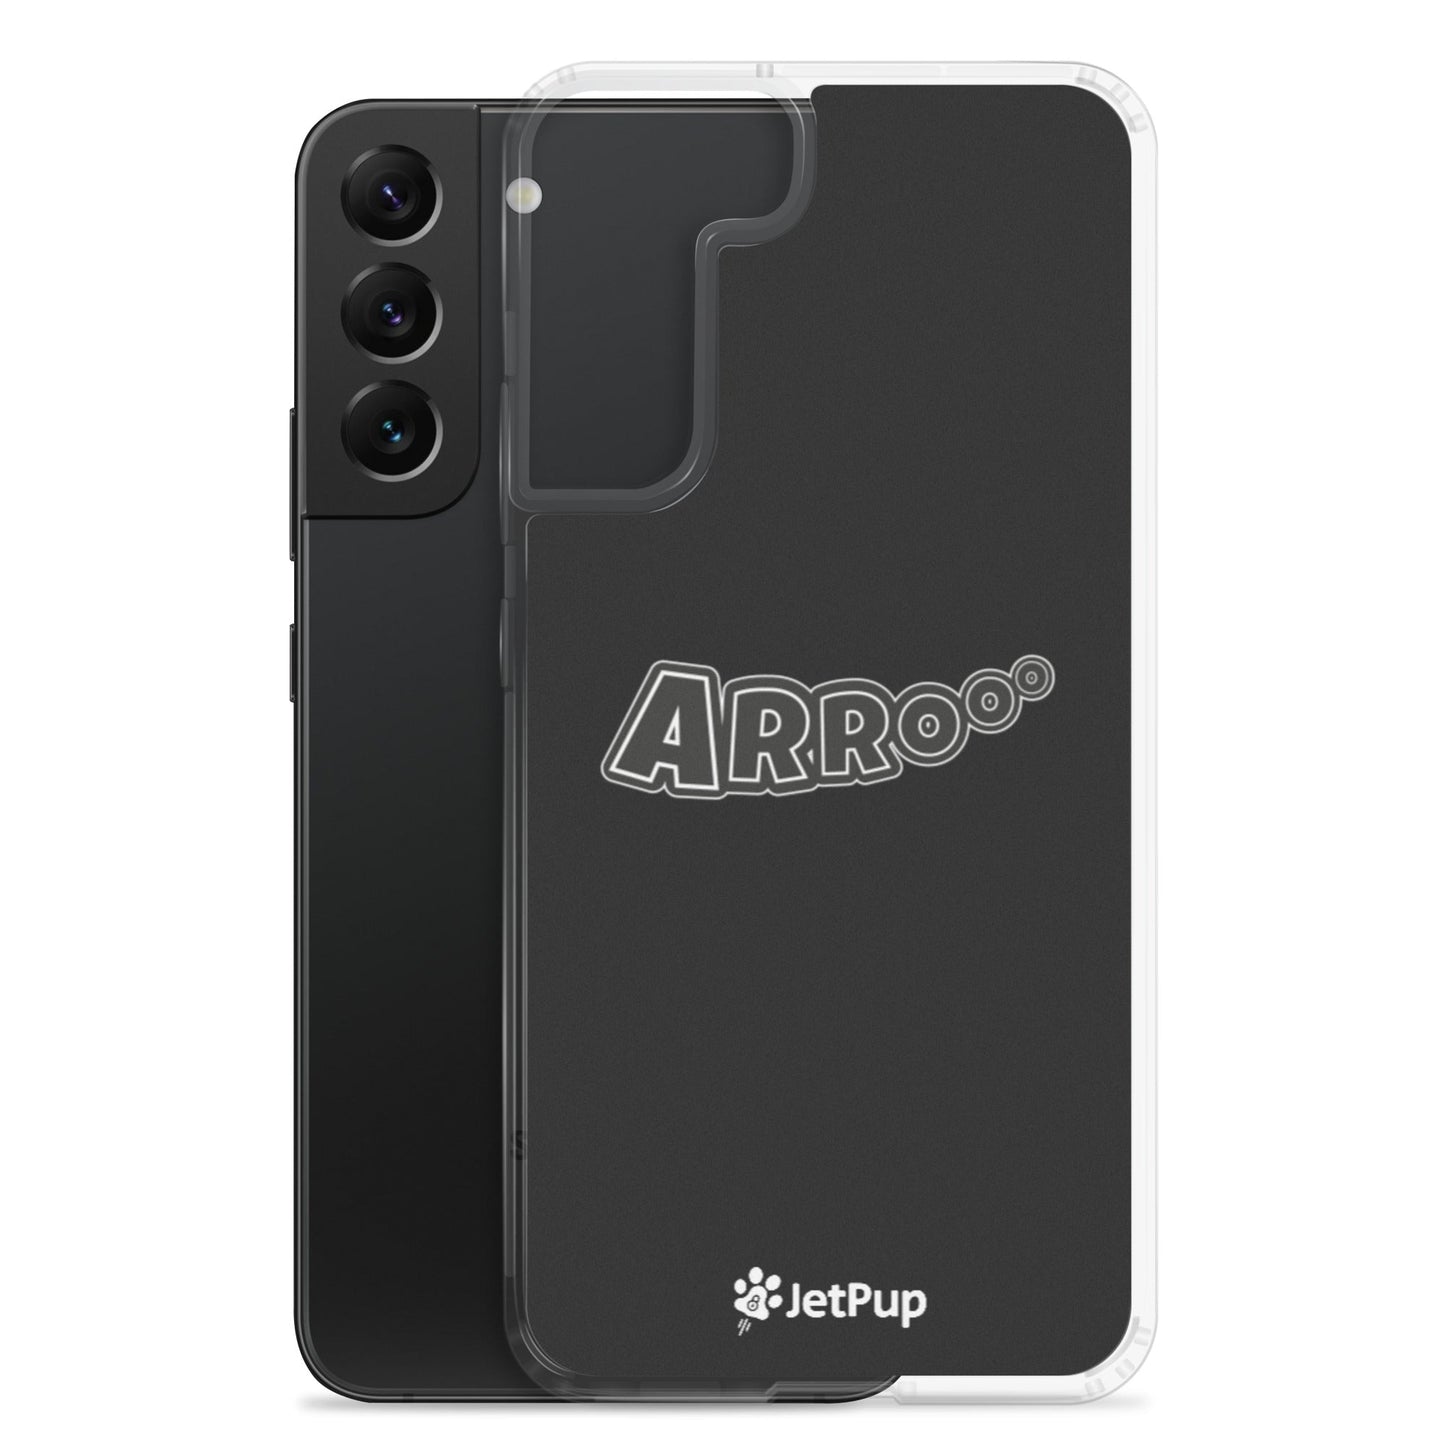 Arrooo Samsung Case - Black - JetPup